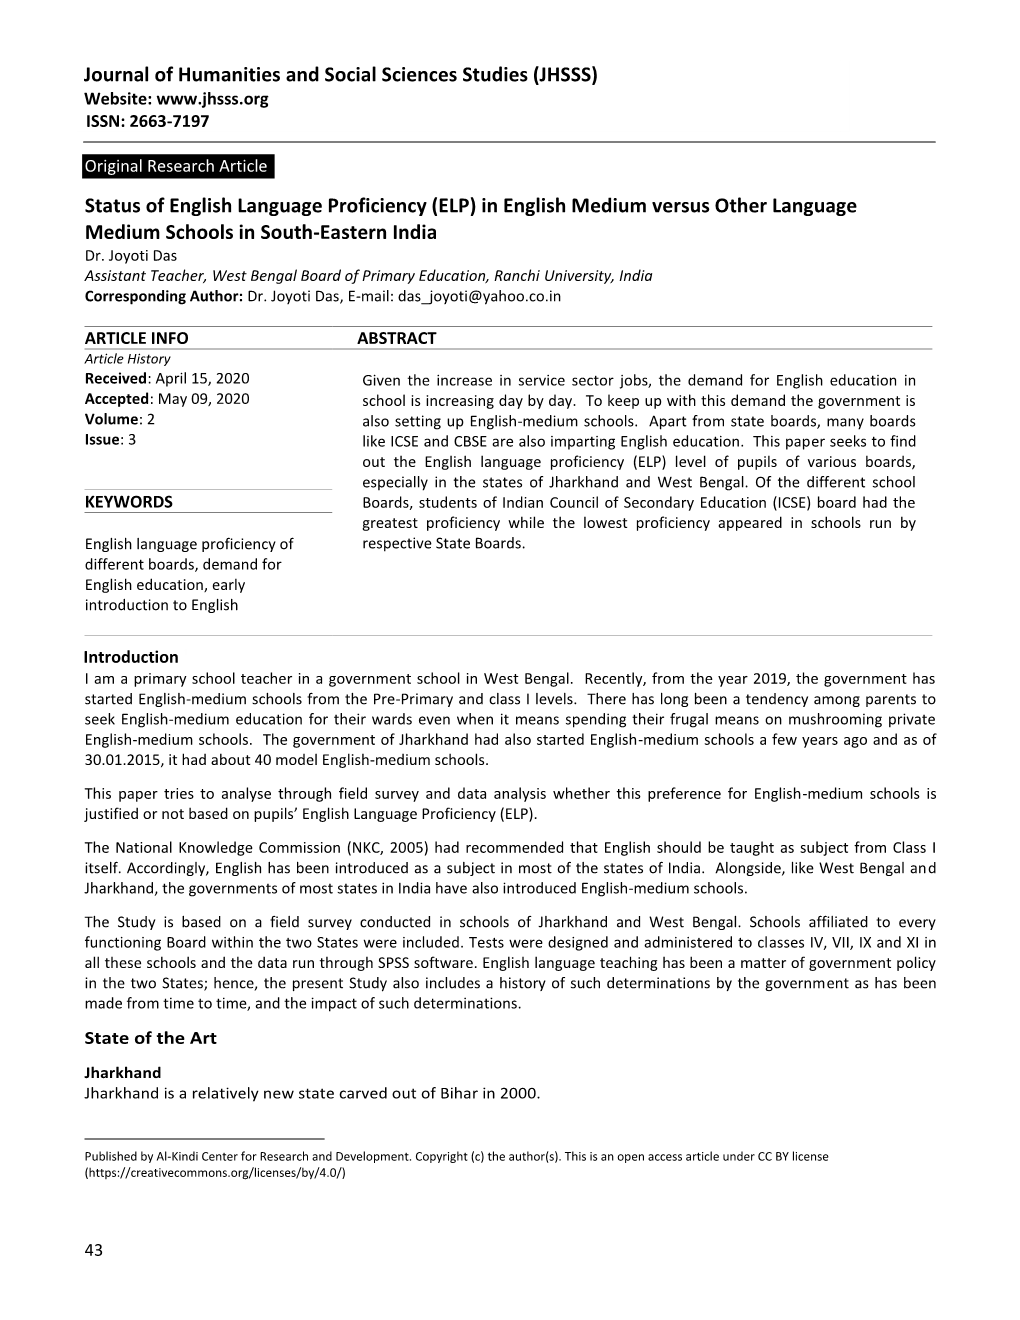 JHSSS) Status of English Language Proficiency (ELP